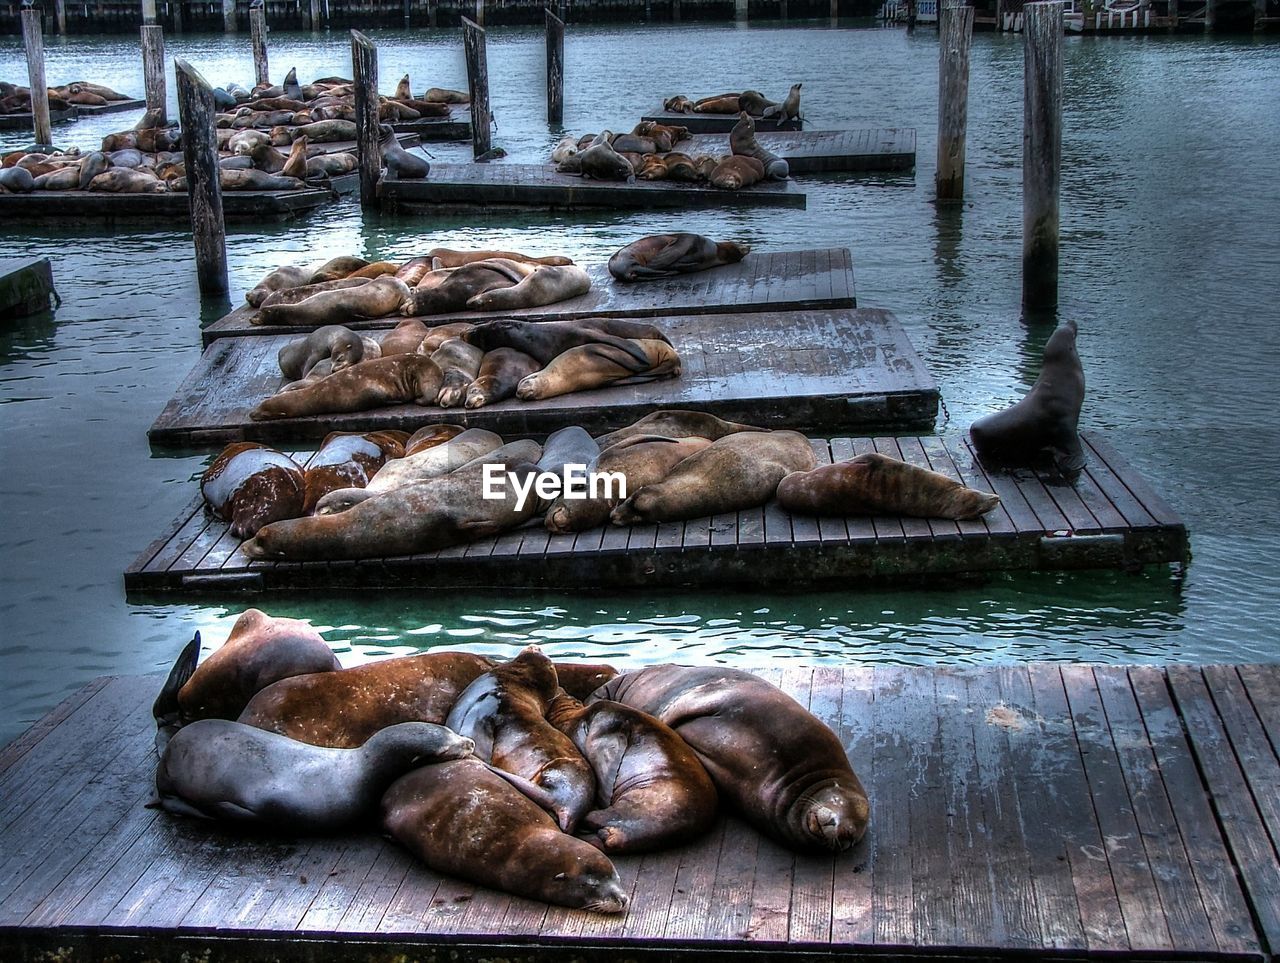 Seals resting on wooden platforms